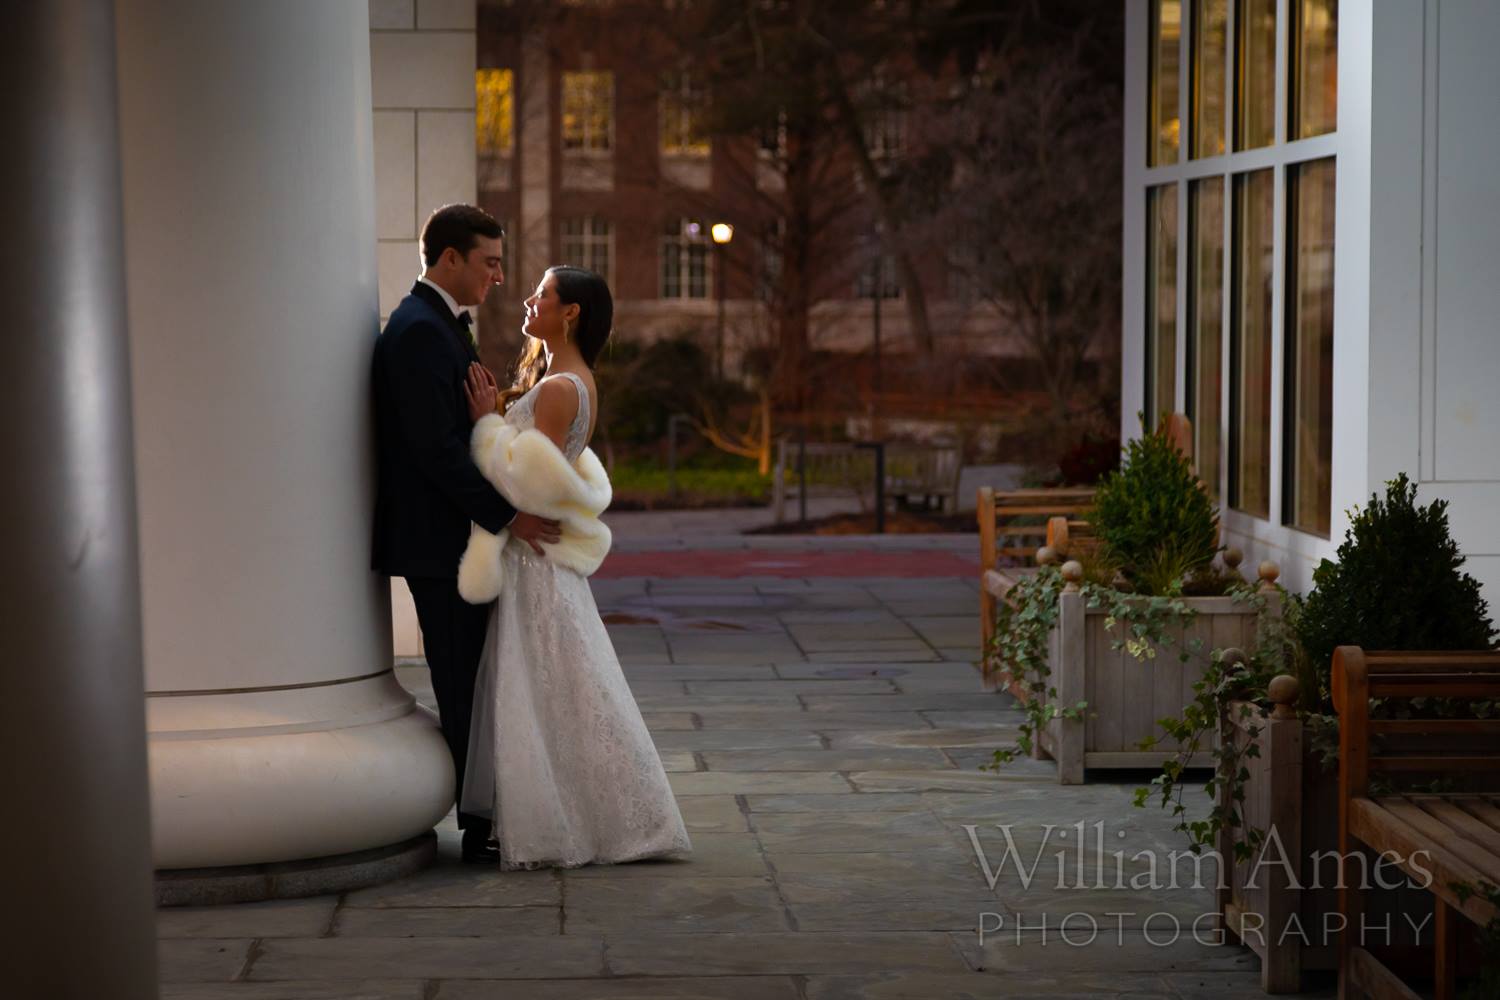 Penn State Night wedding photo